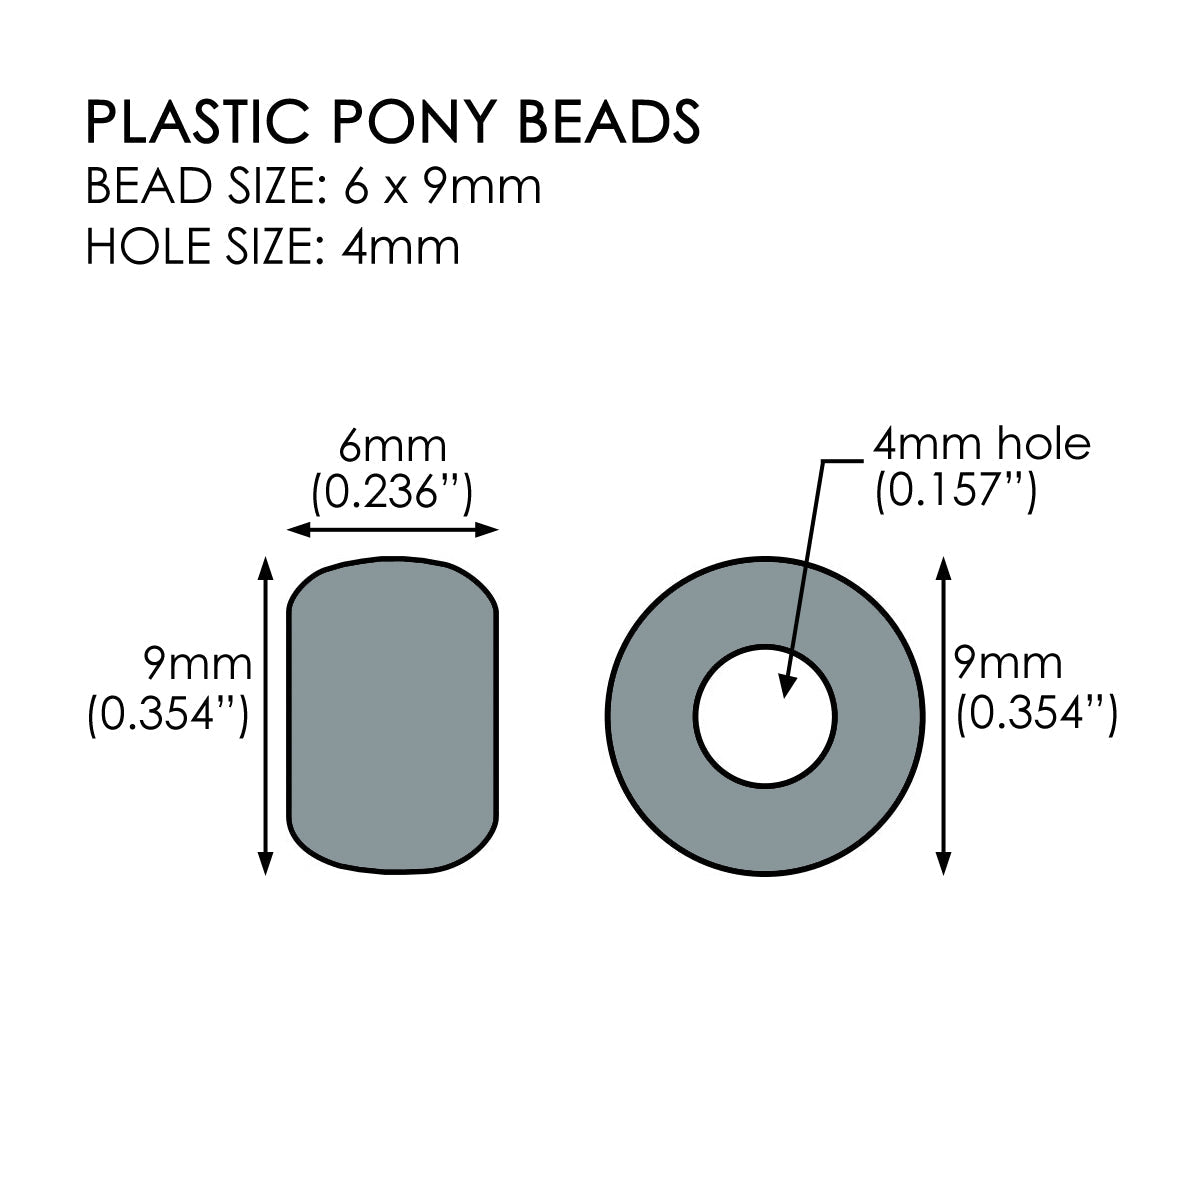 Clear Plastic Craft Pony Beads 6x9mm, 500 beads Bulk Pack - Pony Beads Plus